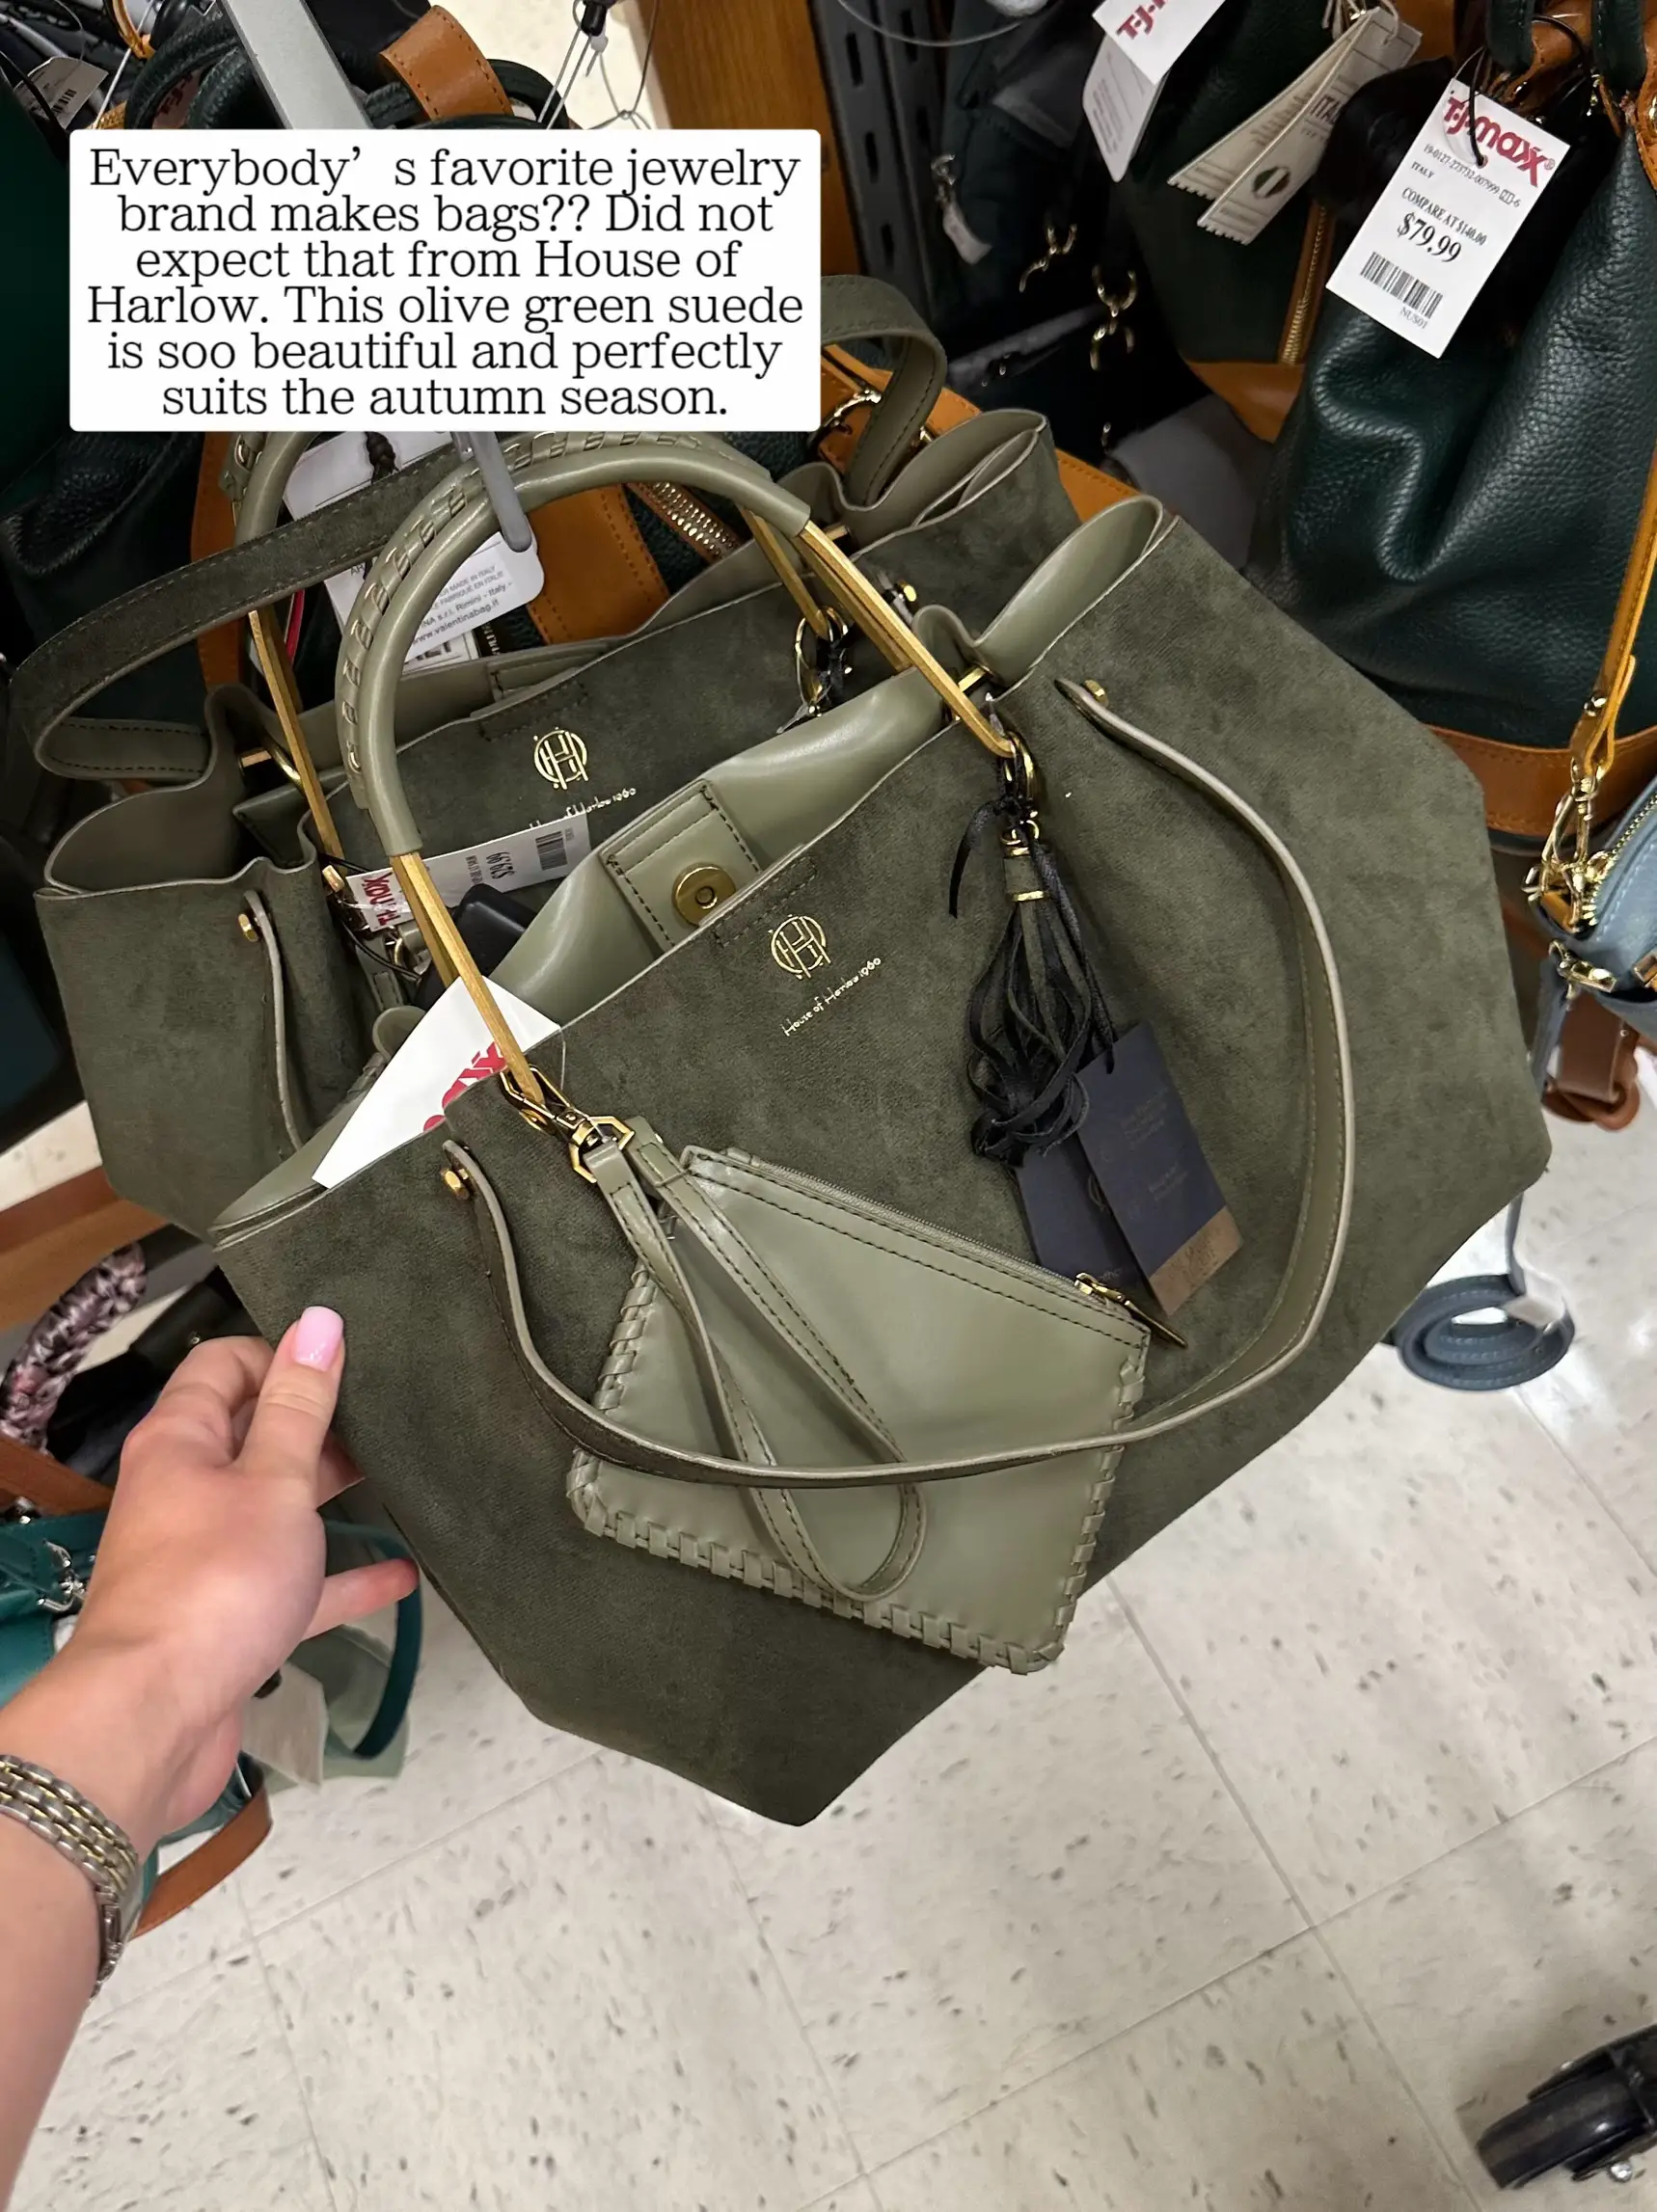 Handbags That Scream Old Money - T. J. MAXX HAUL, Gallery posted by  Anastasiya